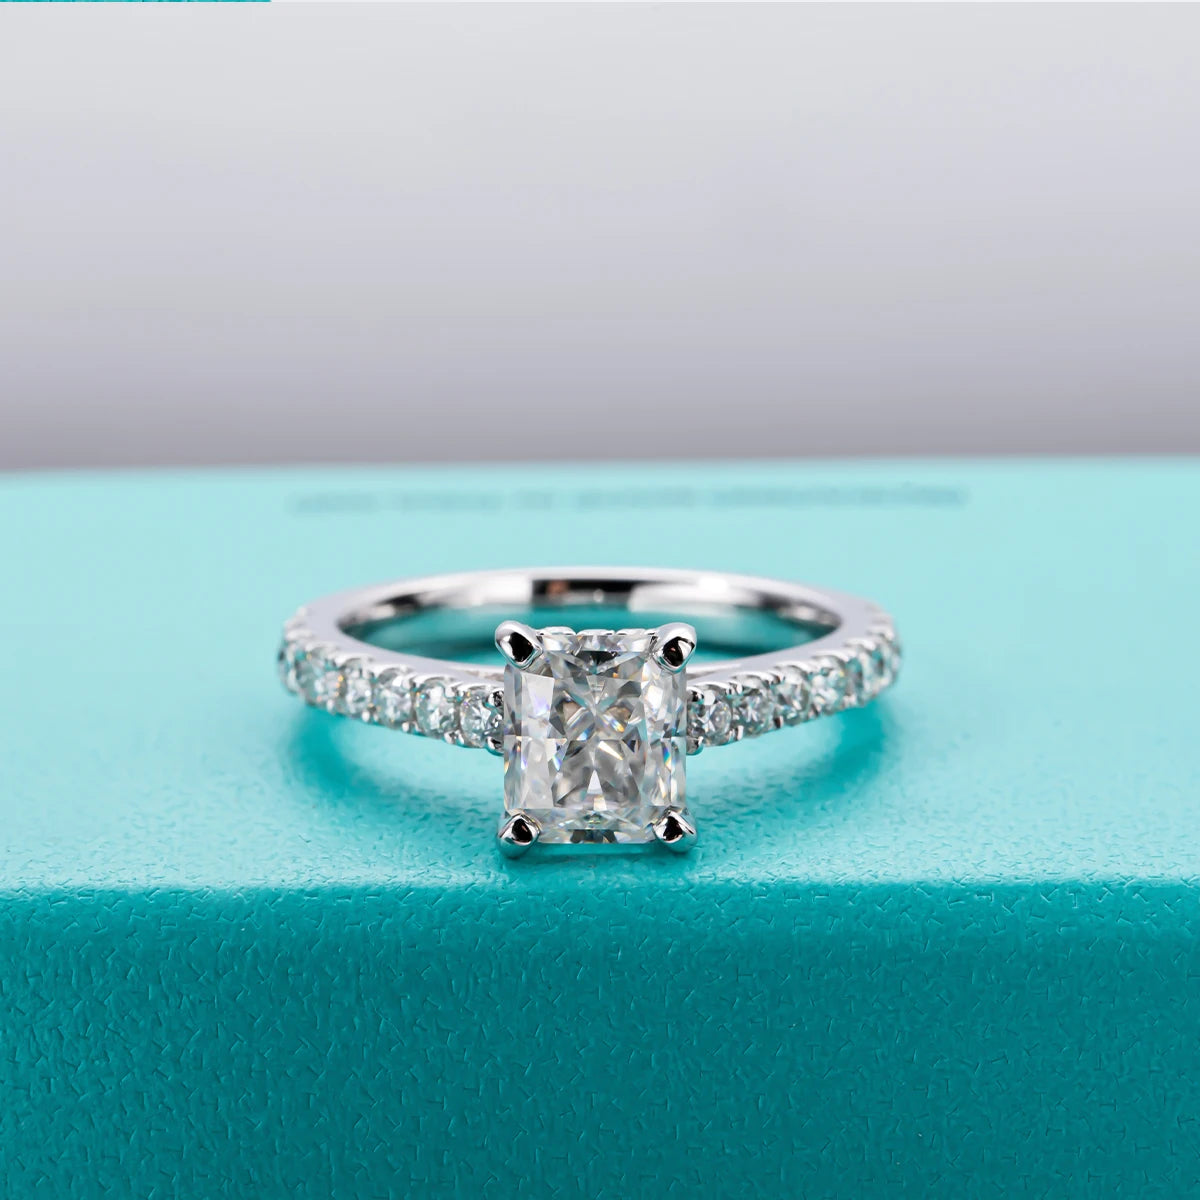 Elegant Sparkling Moissanite Engagement Ring - Simply Perfect!